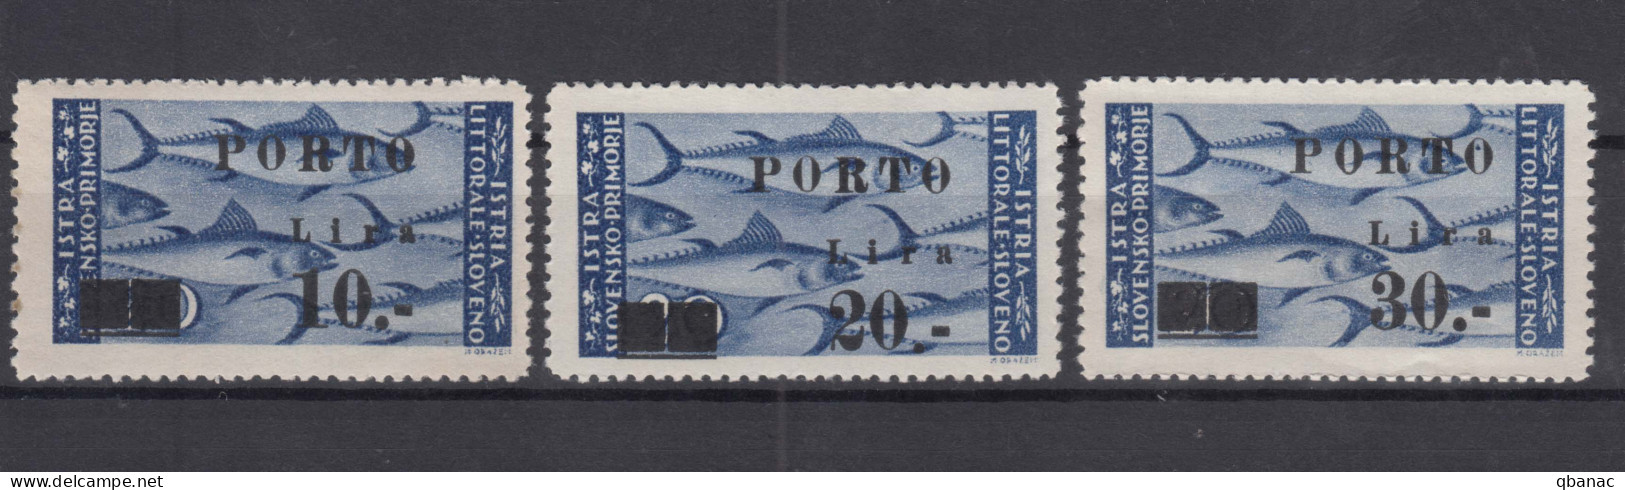 Istria Litorale Yugoslavia Occupation, Porto 1946 Sassone#17-19 Overprint II, Mint Never Hinged - Yugoslavian Occ.: Istria